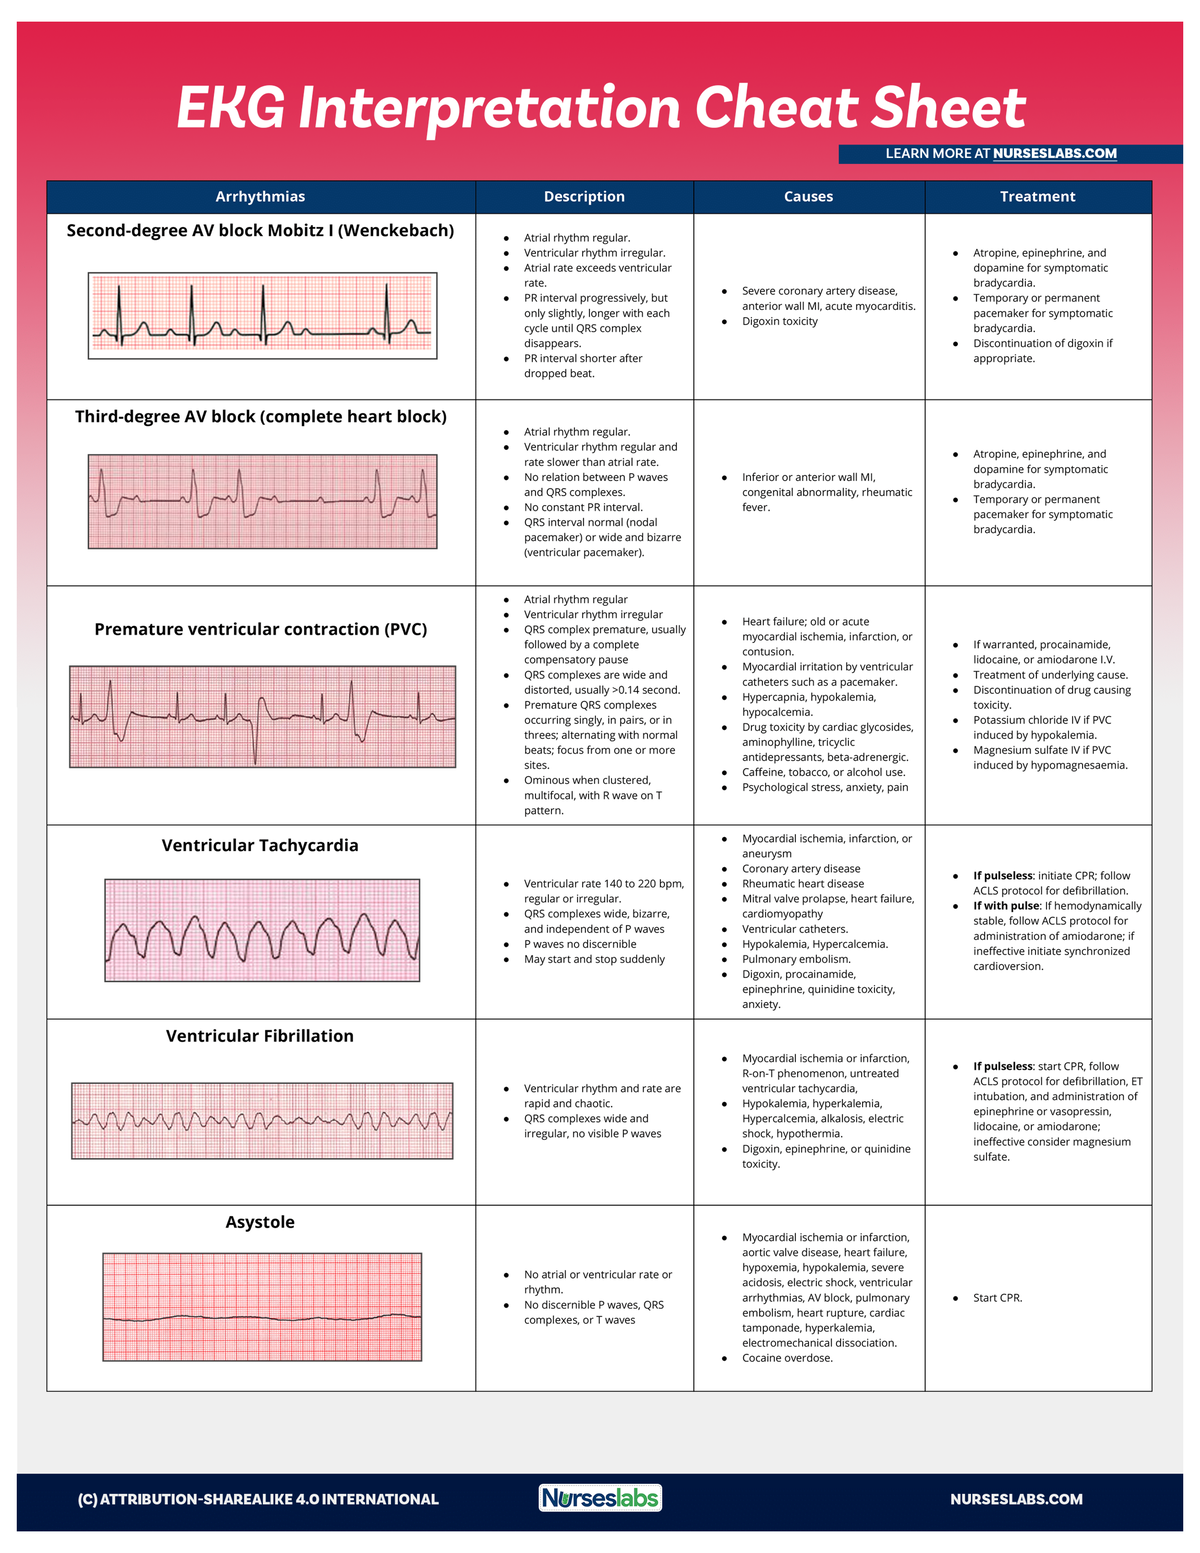 EKG-Interpretation-Cheat-Sheet-for-Heart-Arrhythmias Nurseslabs 3 ...